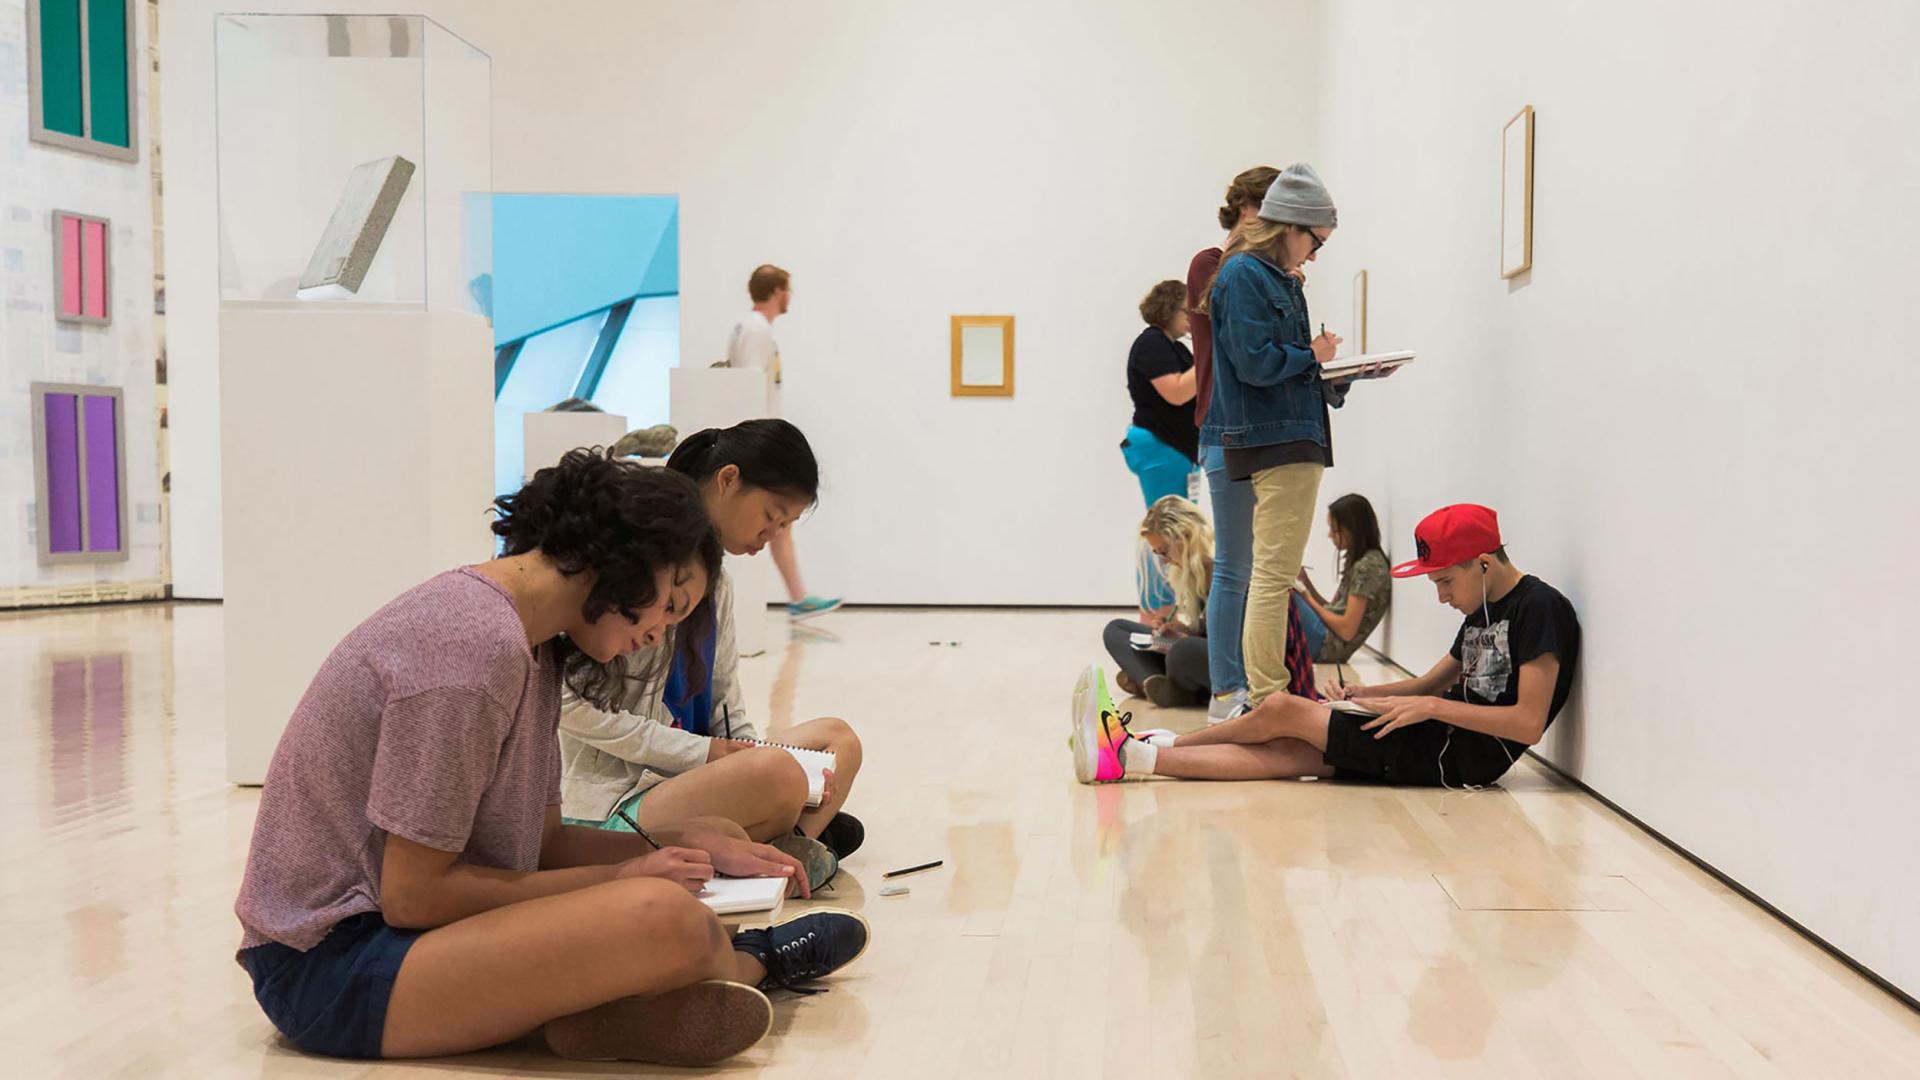 People sitting on a art gallery floor